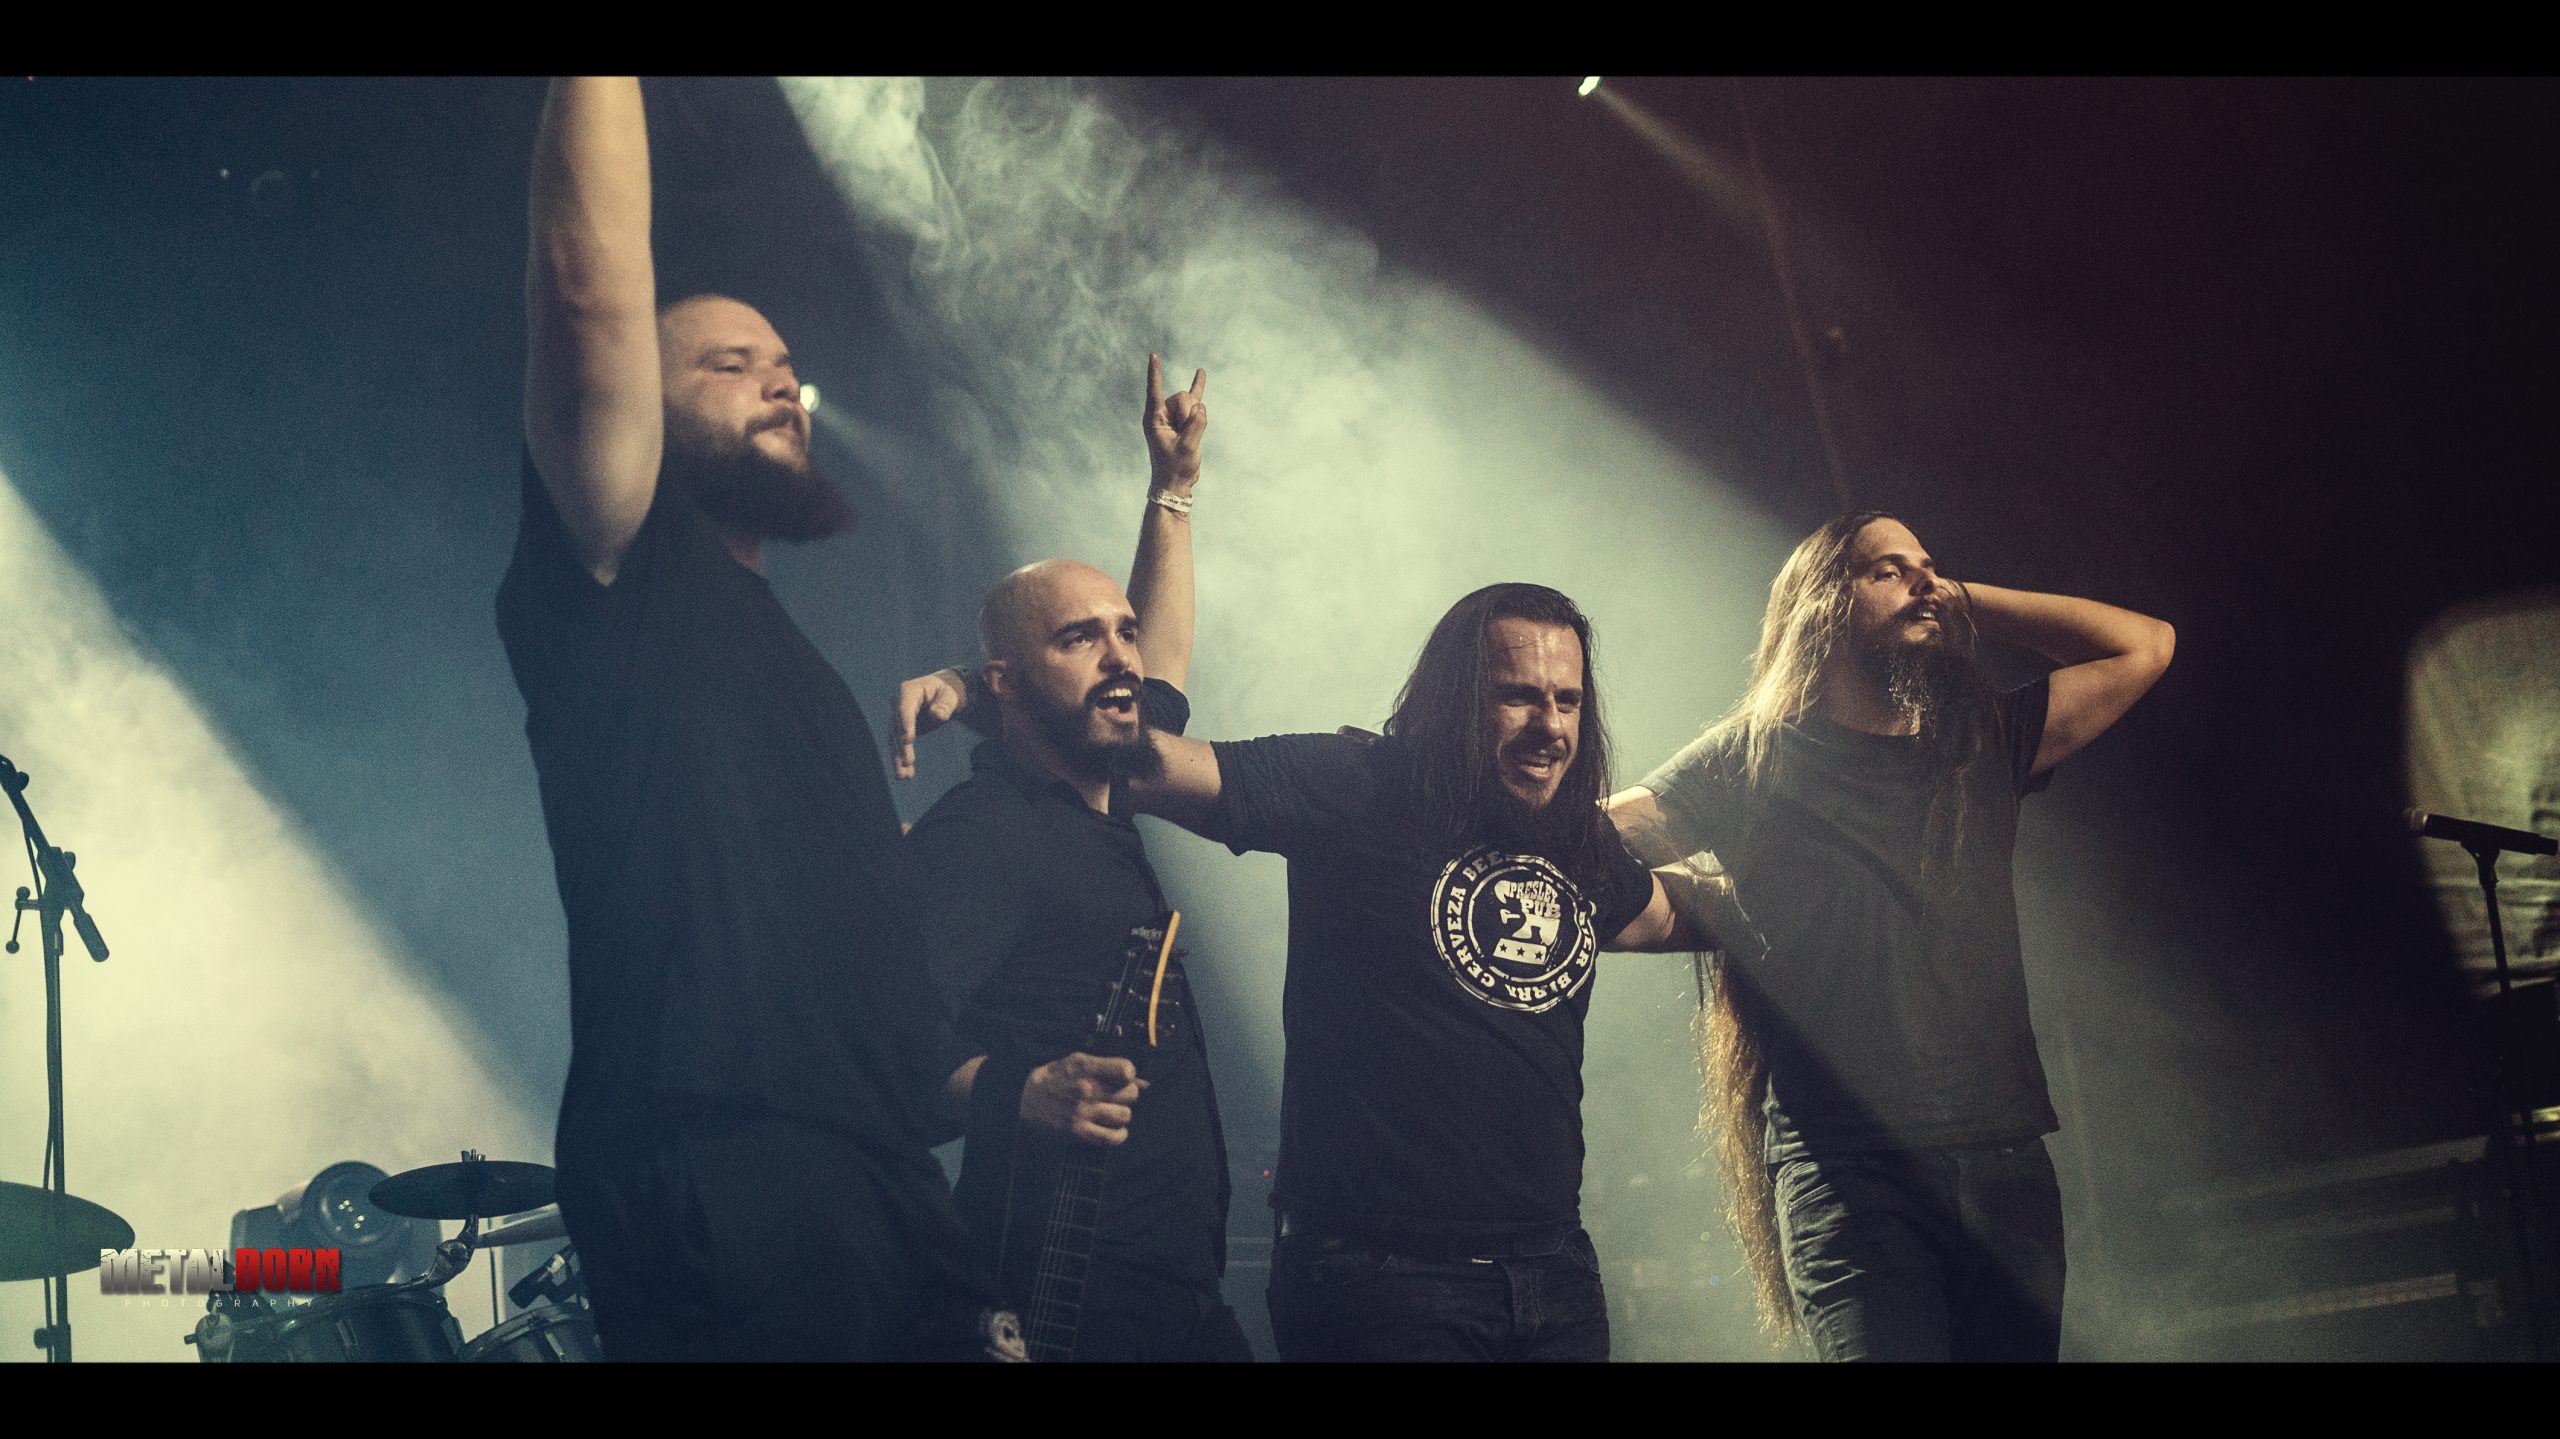 Alekto: Músicos brasileiros representando nosso país na cena Metal Européia